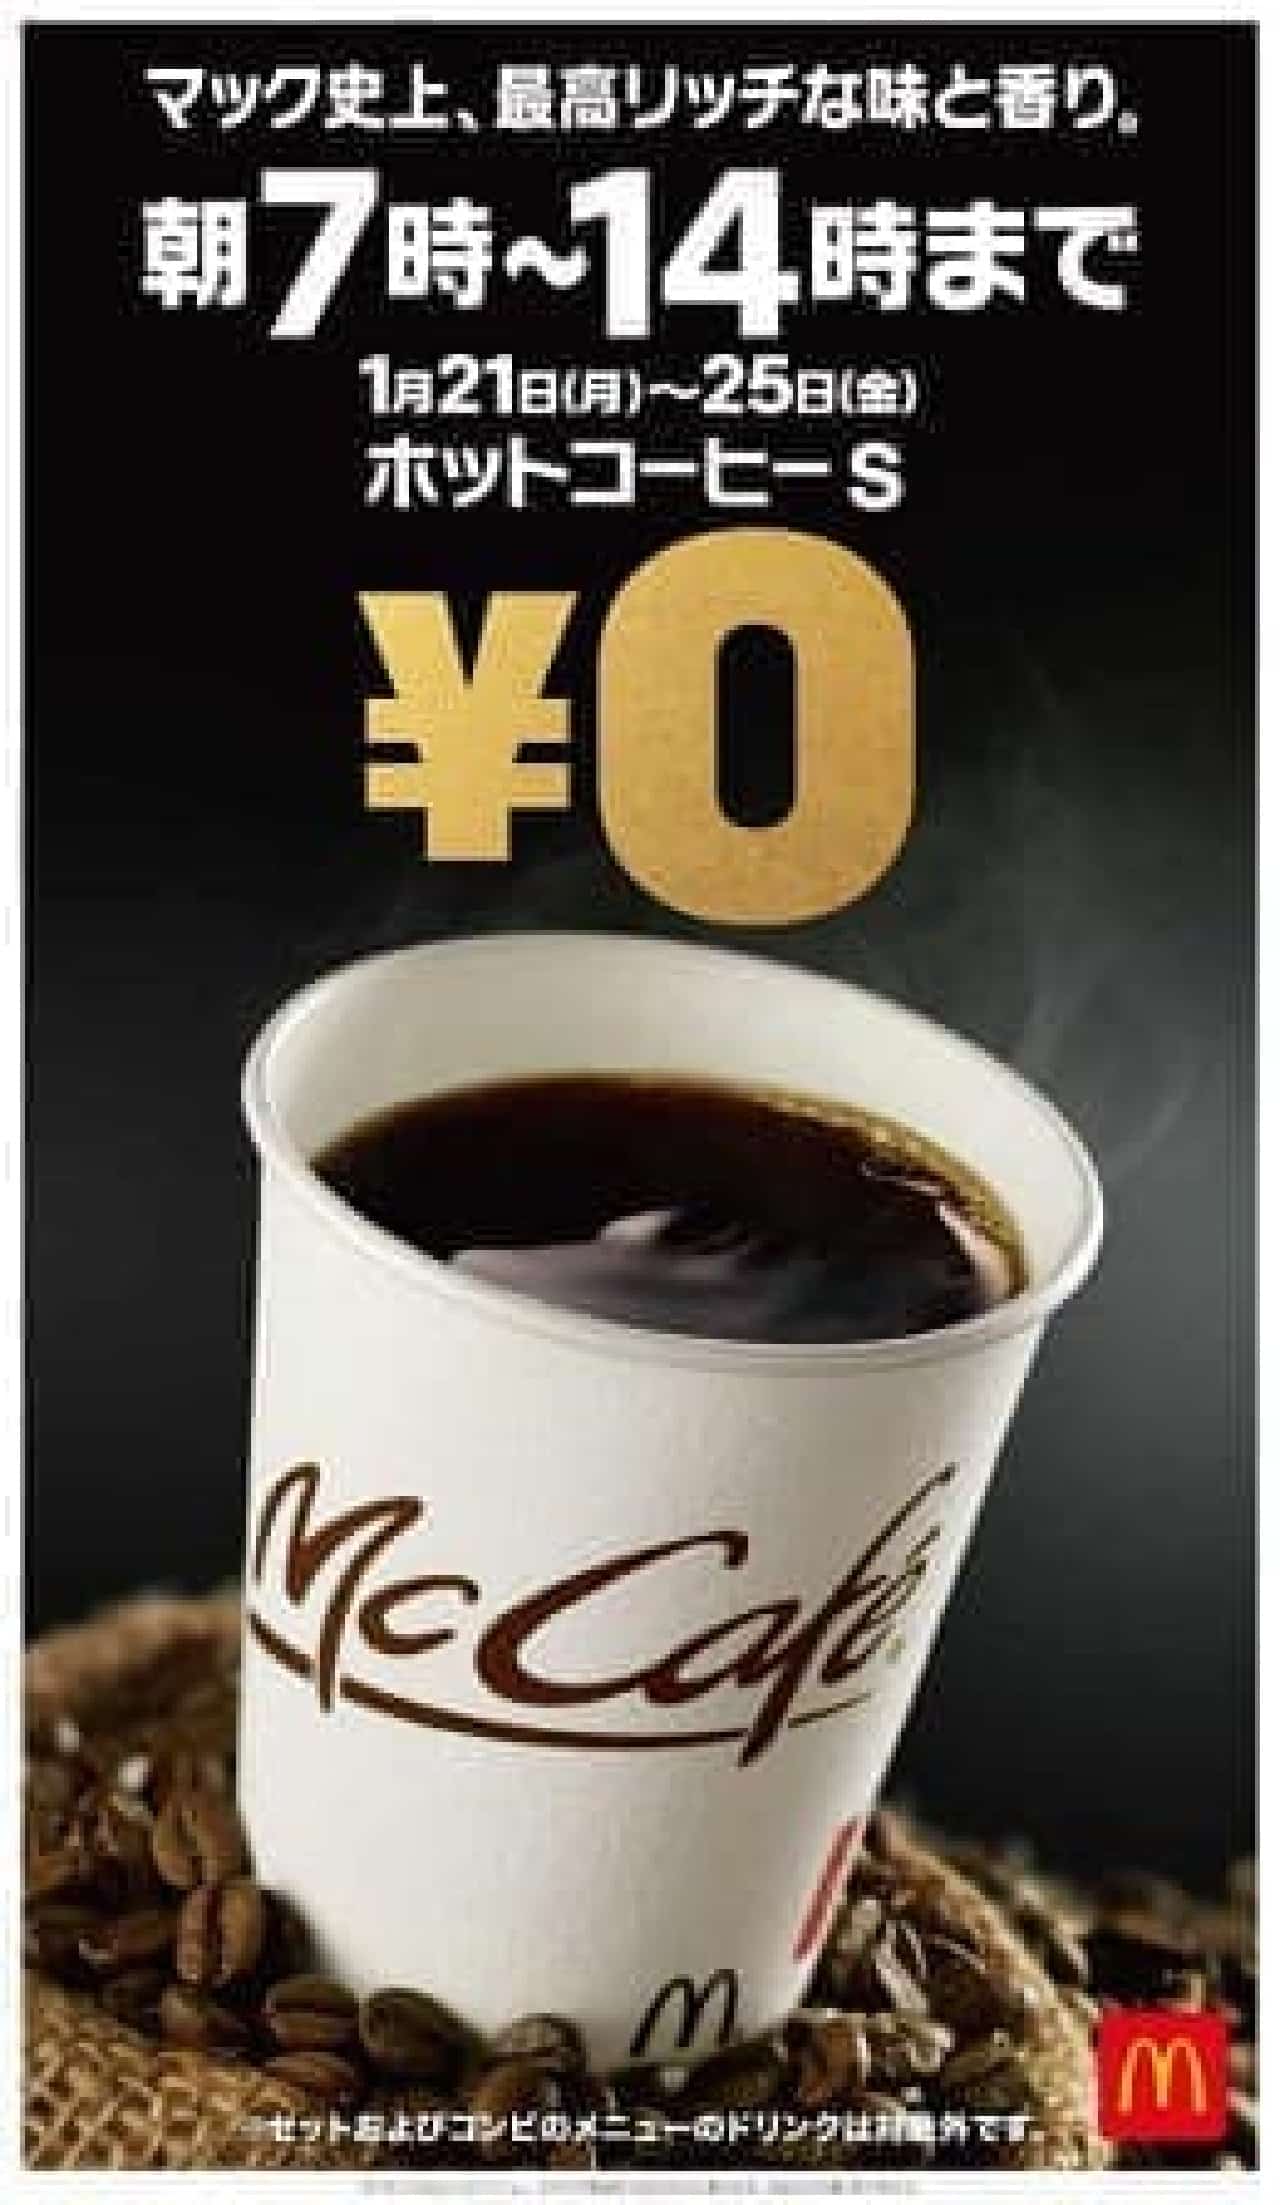 McDonald's "Premium Roast Coffee"